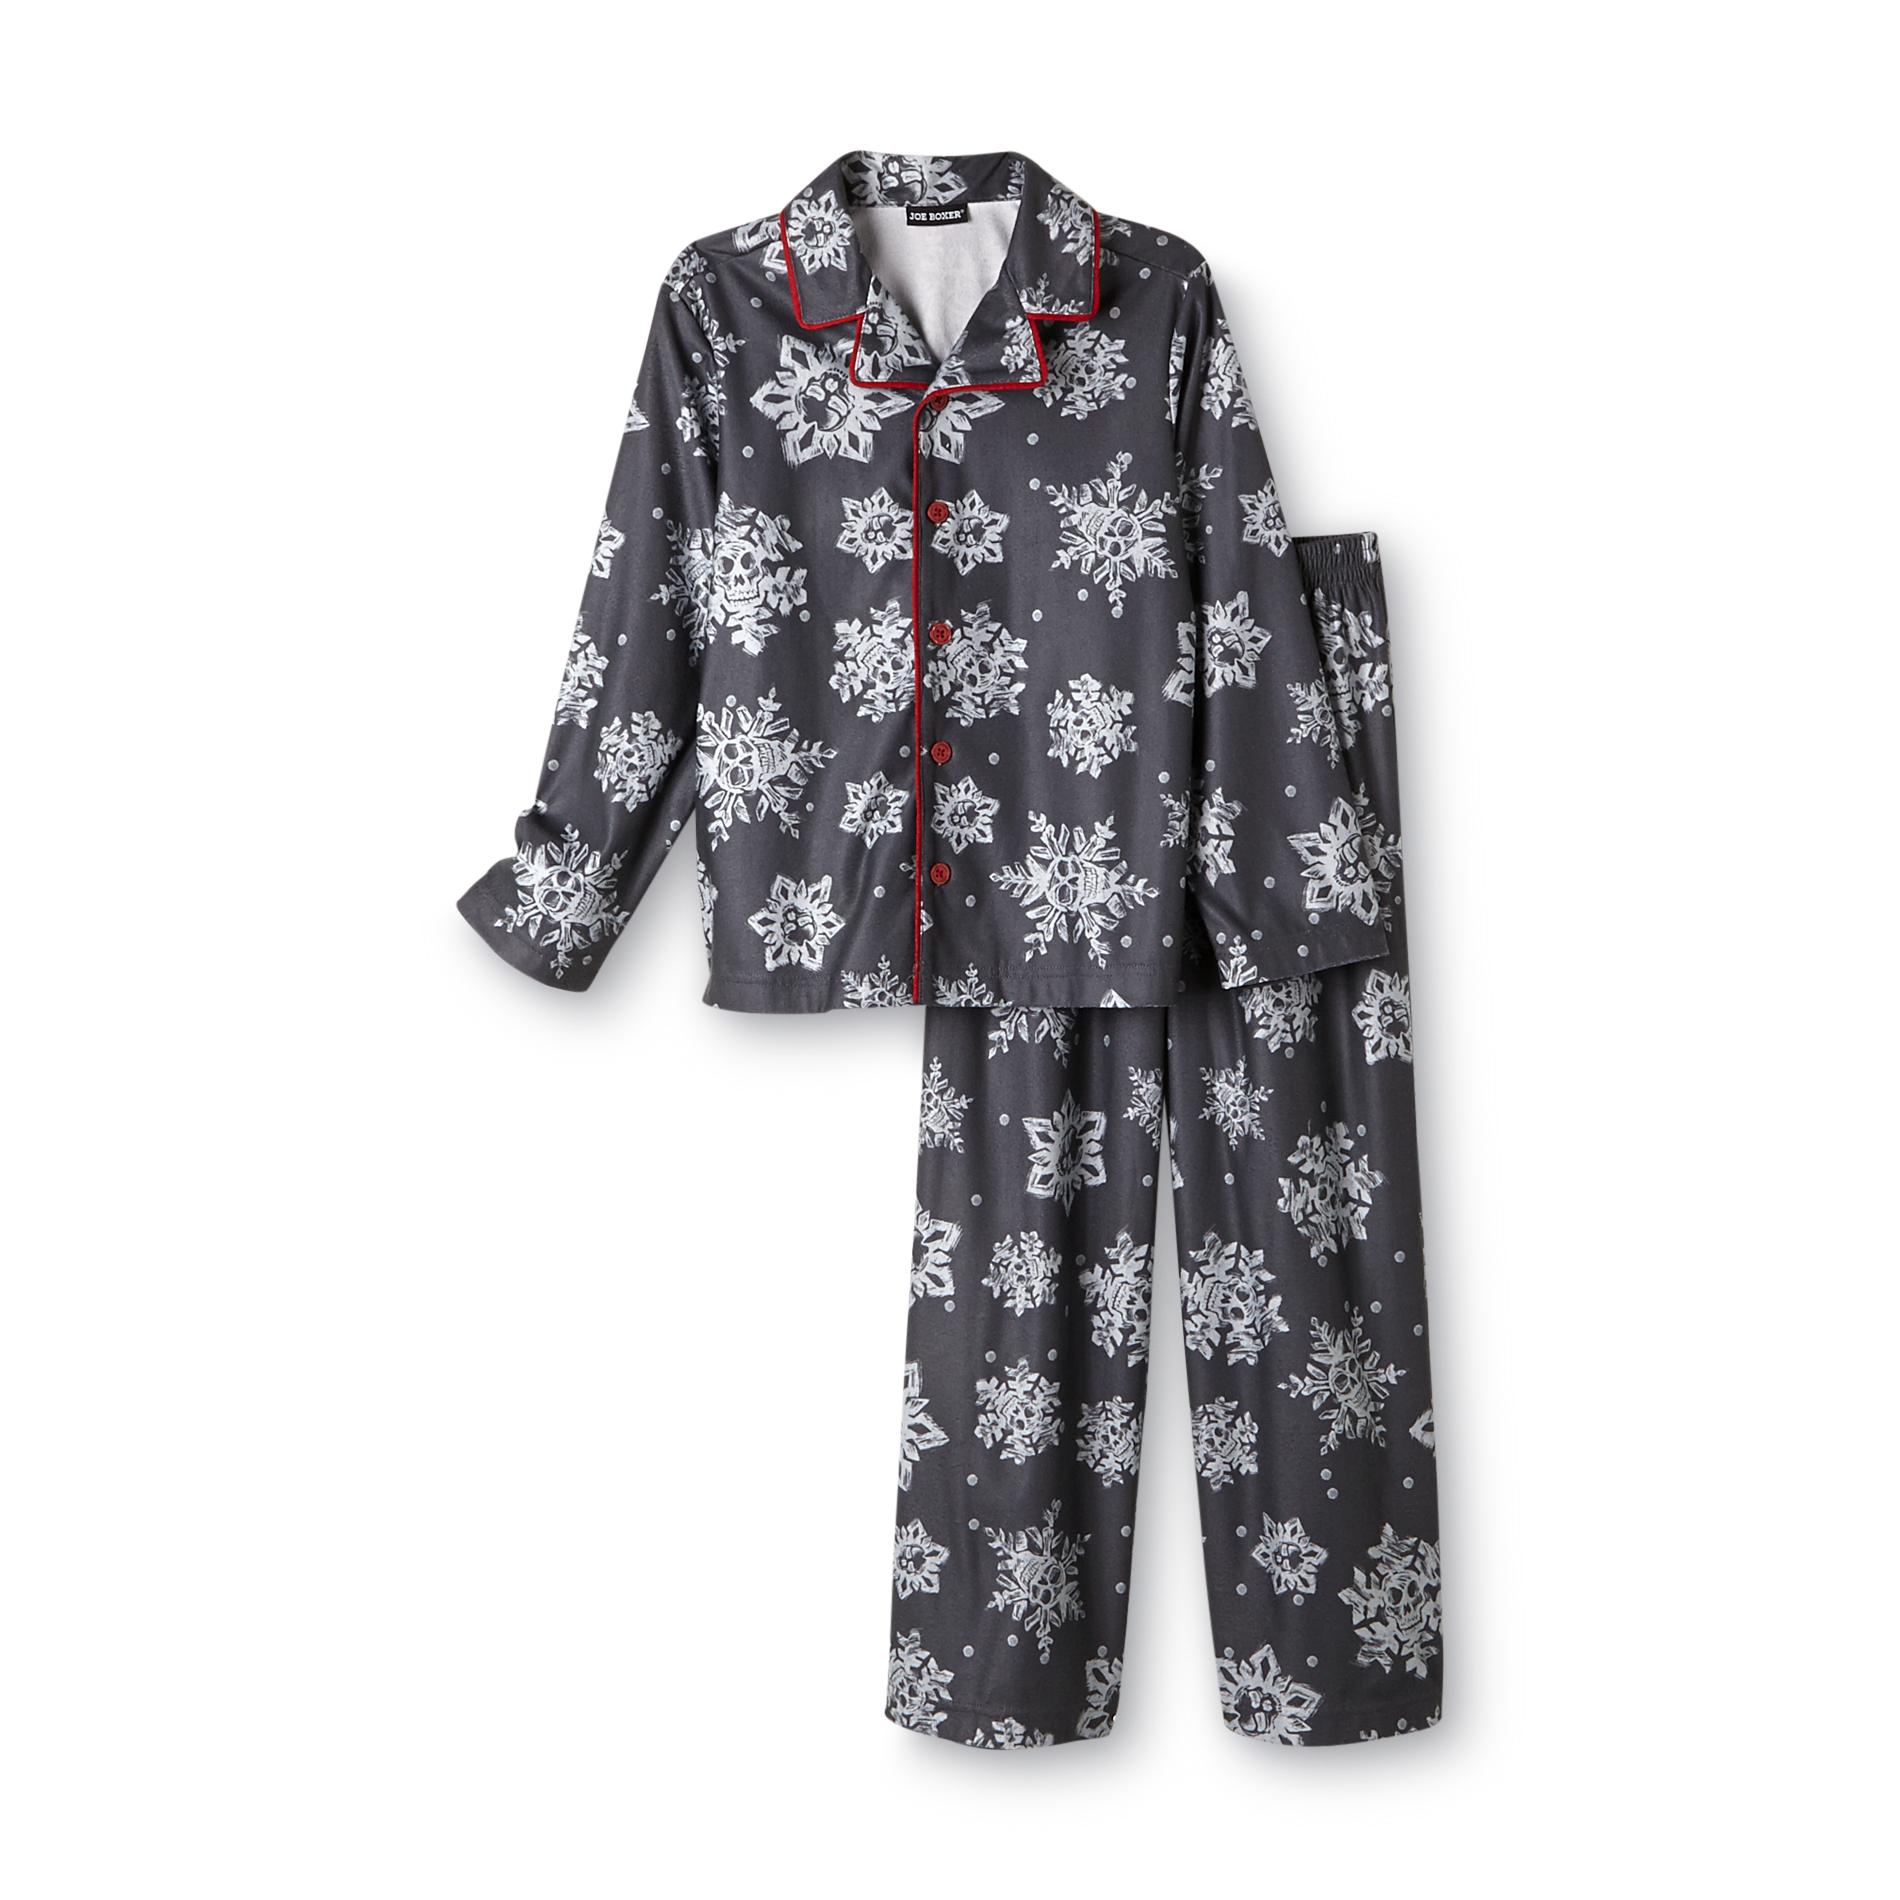 Joe Boxer Boy's Flannel Pajamas - Snowflakes & Skulls